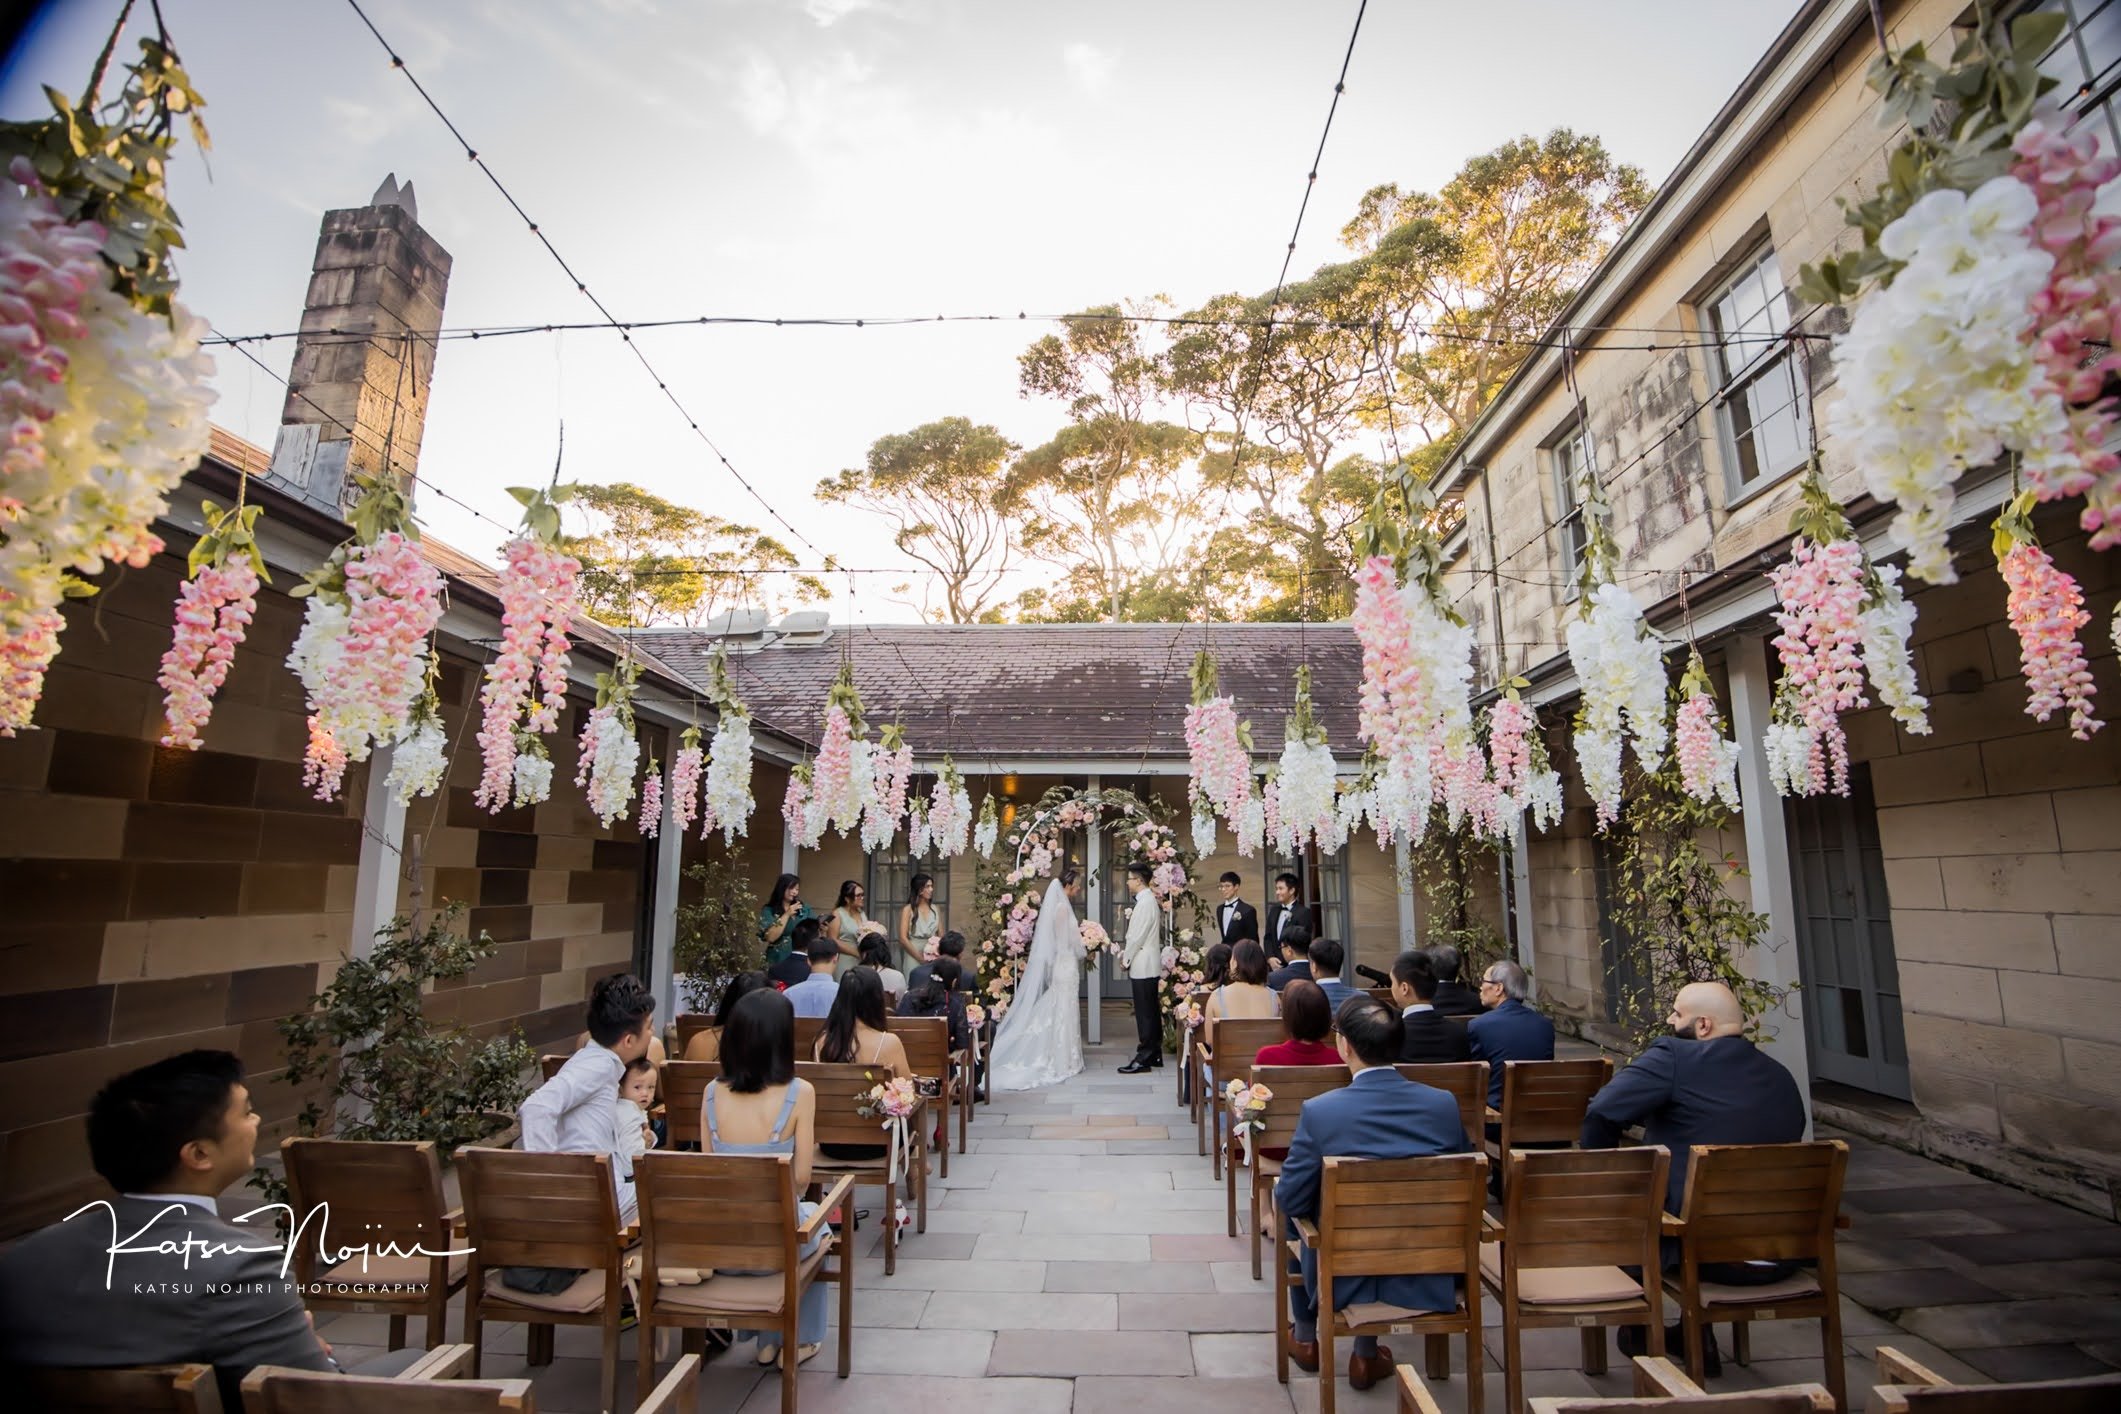 Sydney Wedding Photography by Katsu-252.jpg